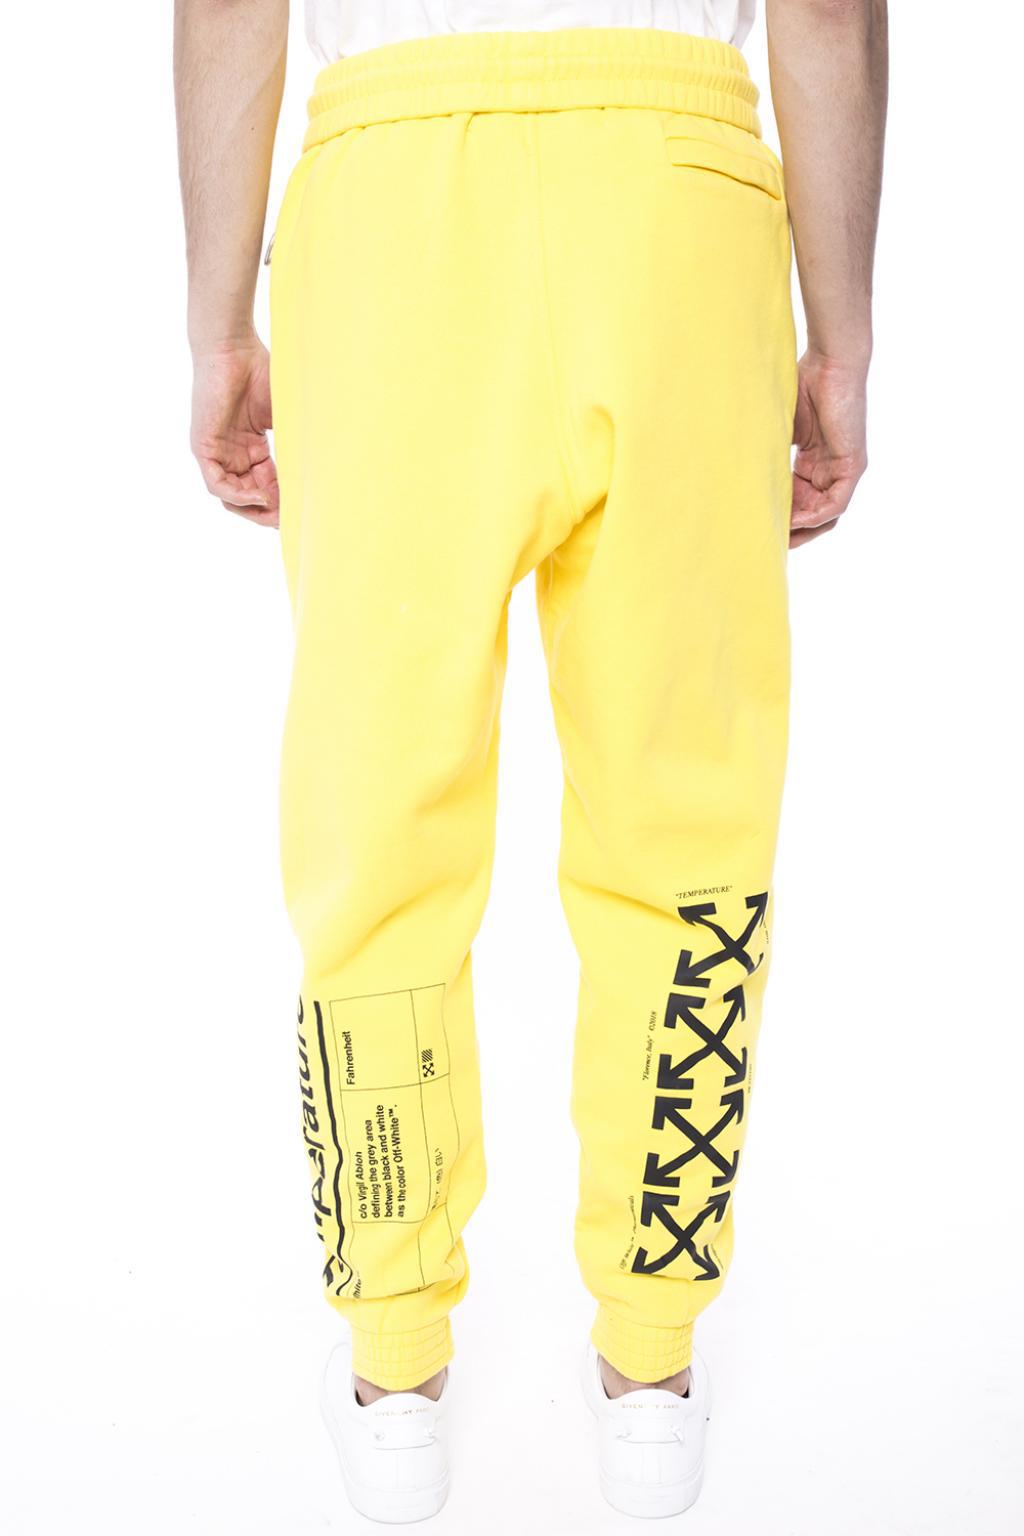 Off-White c/o Virgil Abloh Yellow Goretex Lounge Pants for Men